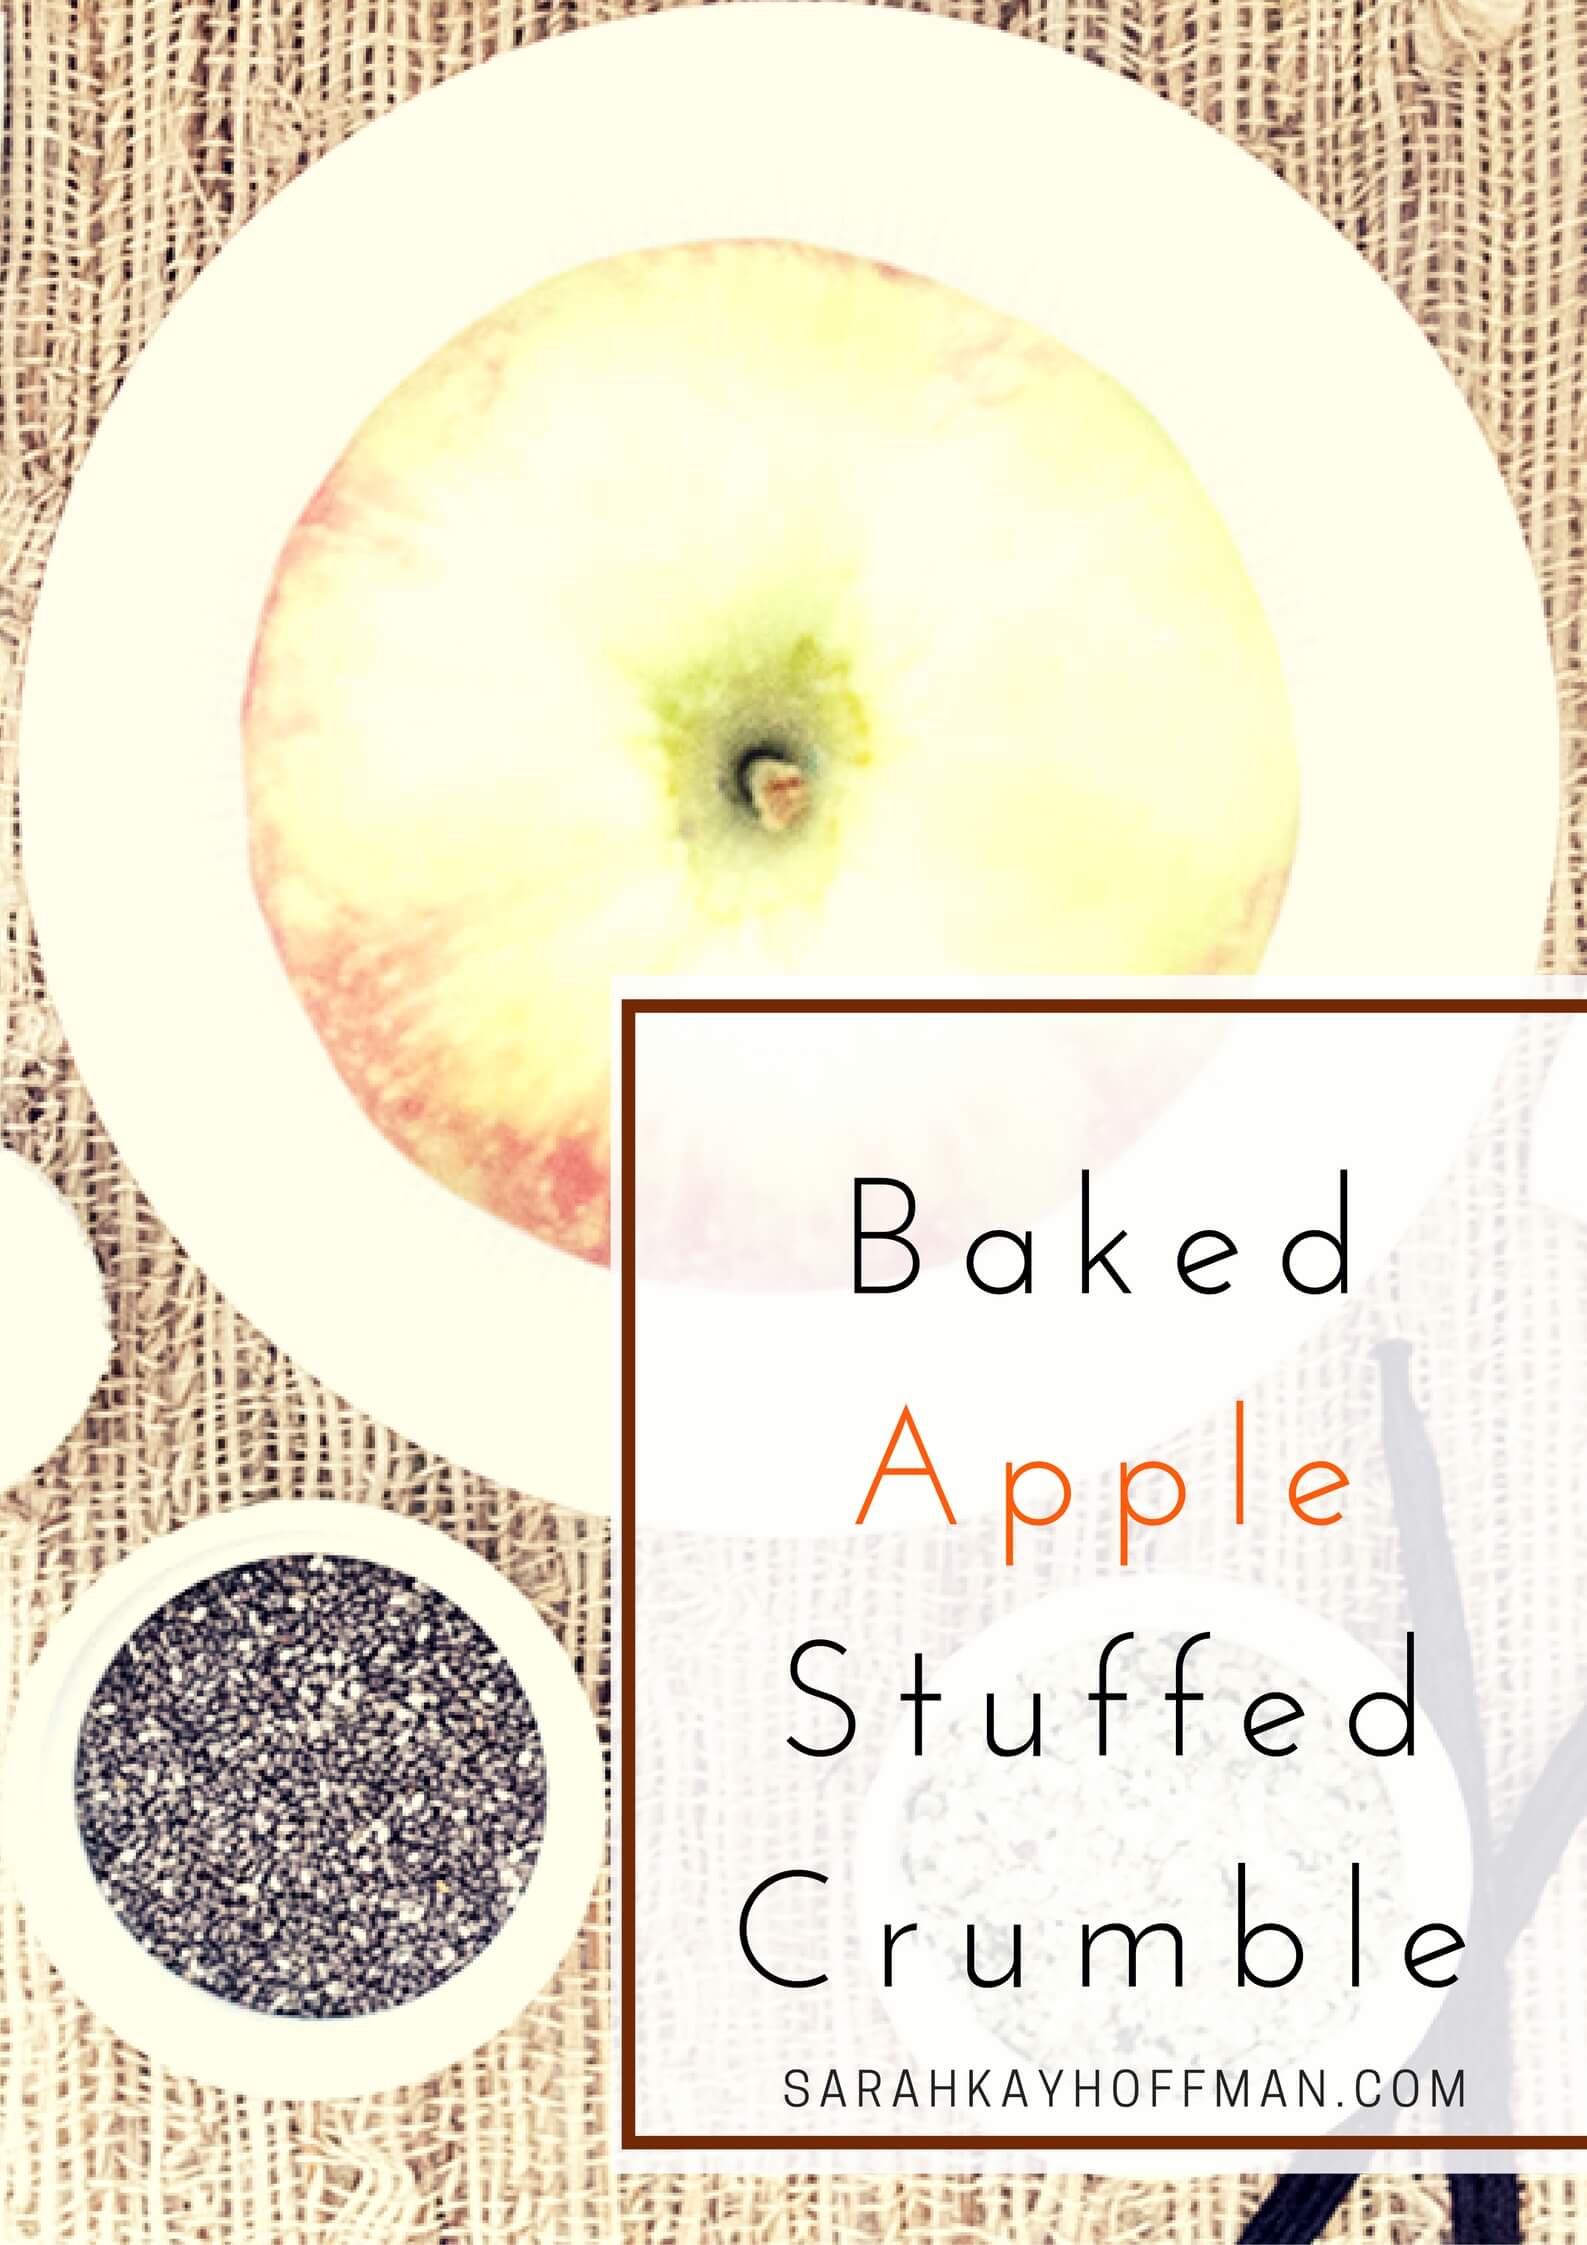 Baked Apple Stuffed Crumble via sarahkayhoffman.com